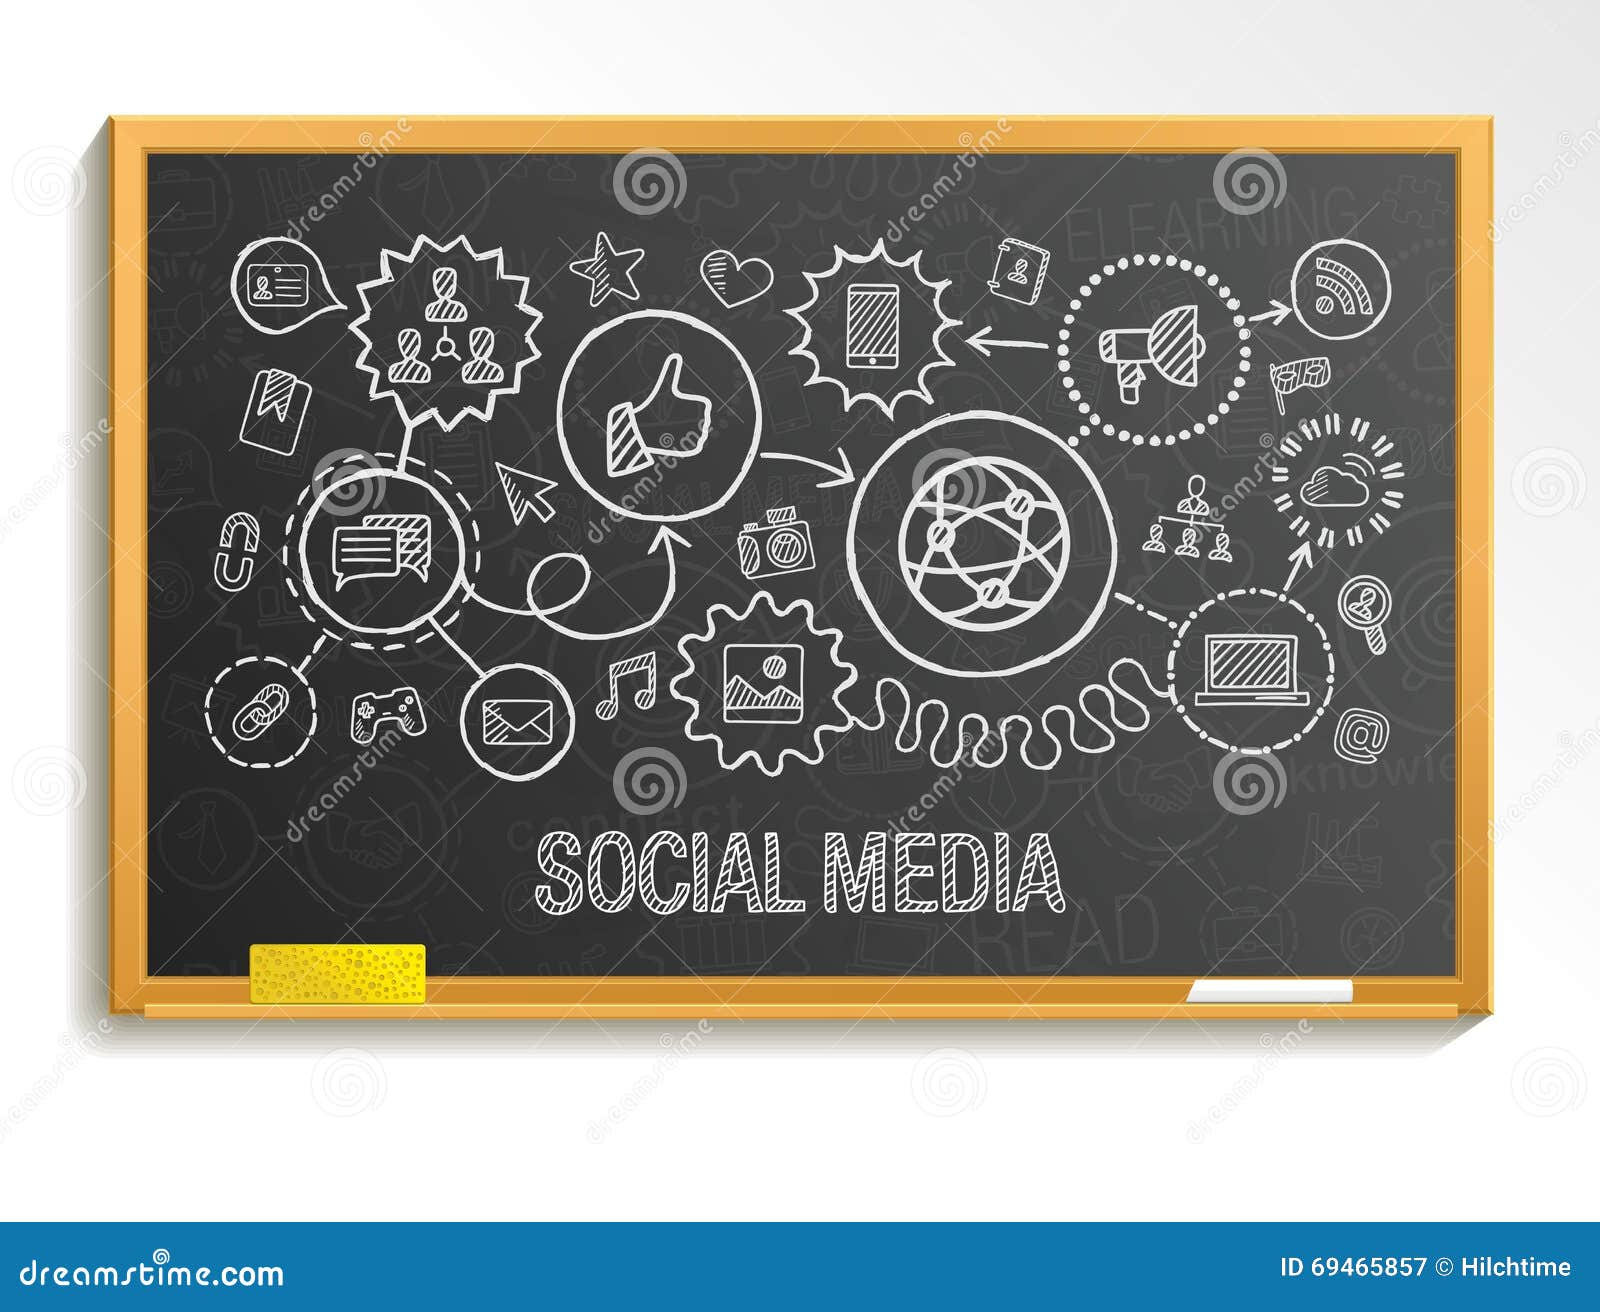 social media hand draw integrate icons set on school blackboard